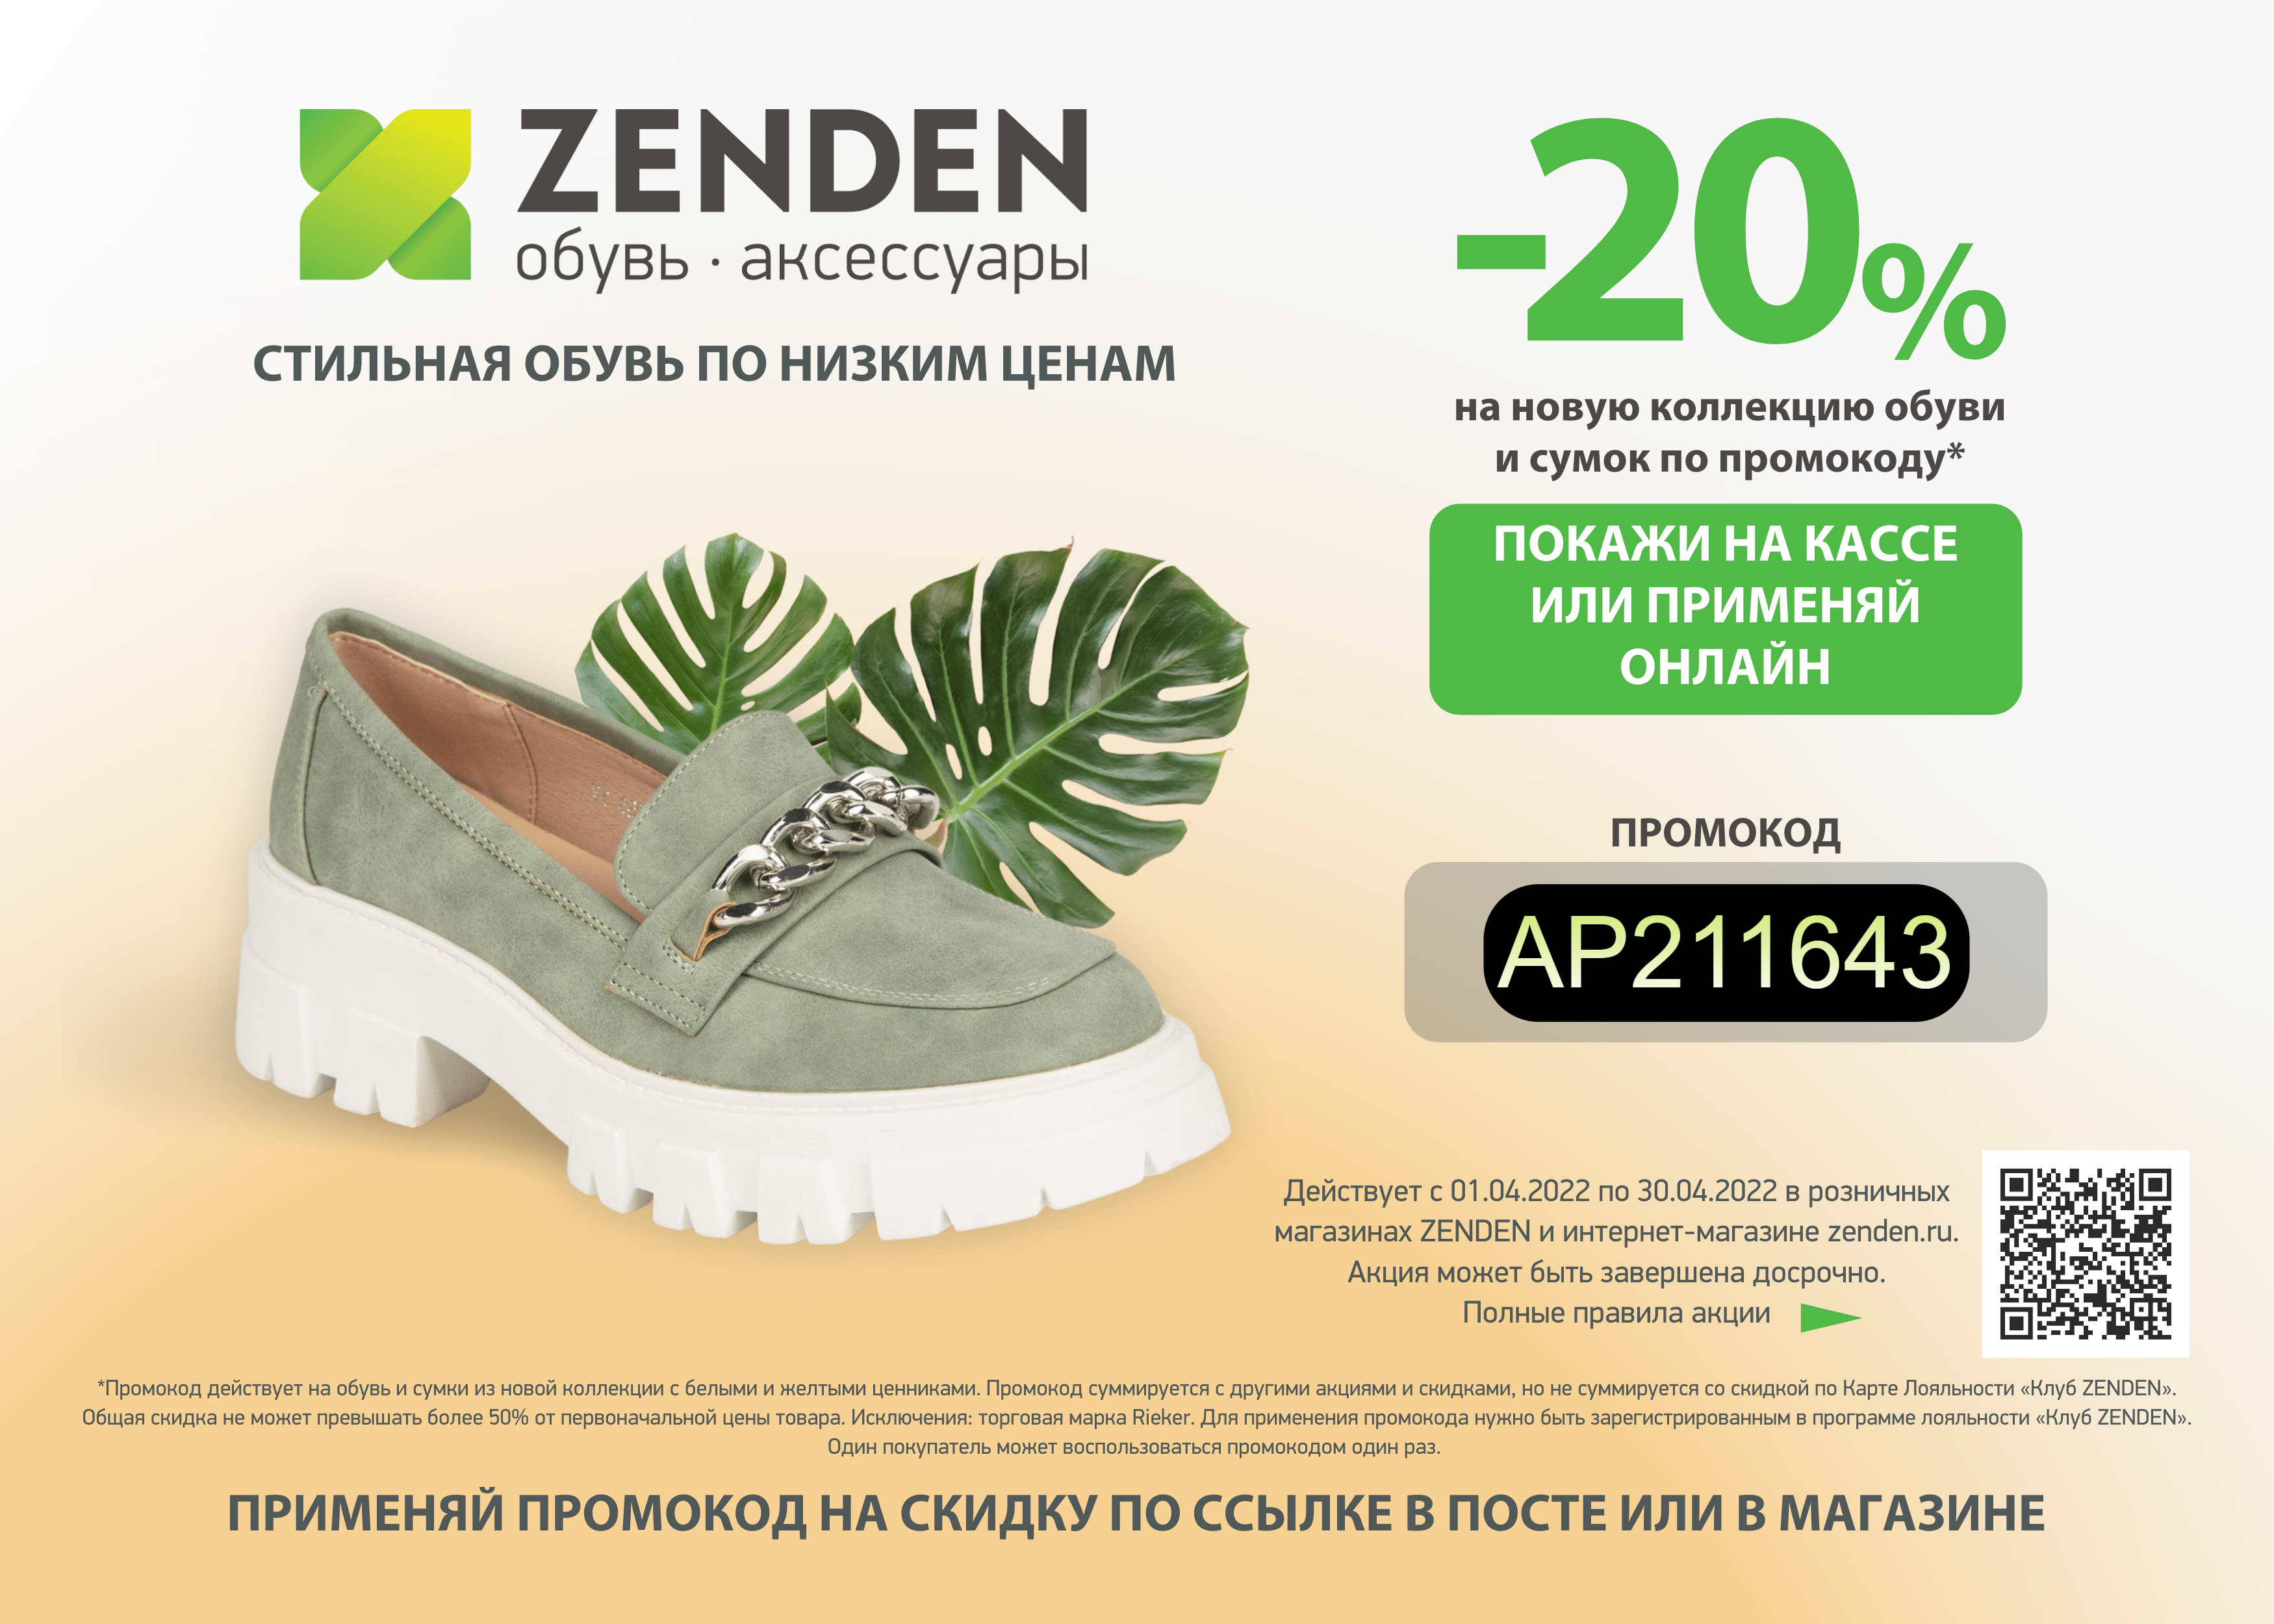 Zenden обувь. Промокод Zenden. Зенден акция. Zenden обувь реклама. Zenden обувь качество.